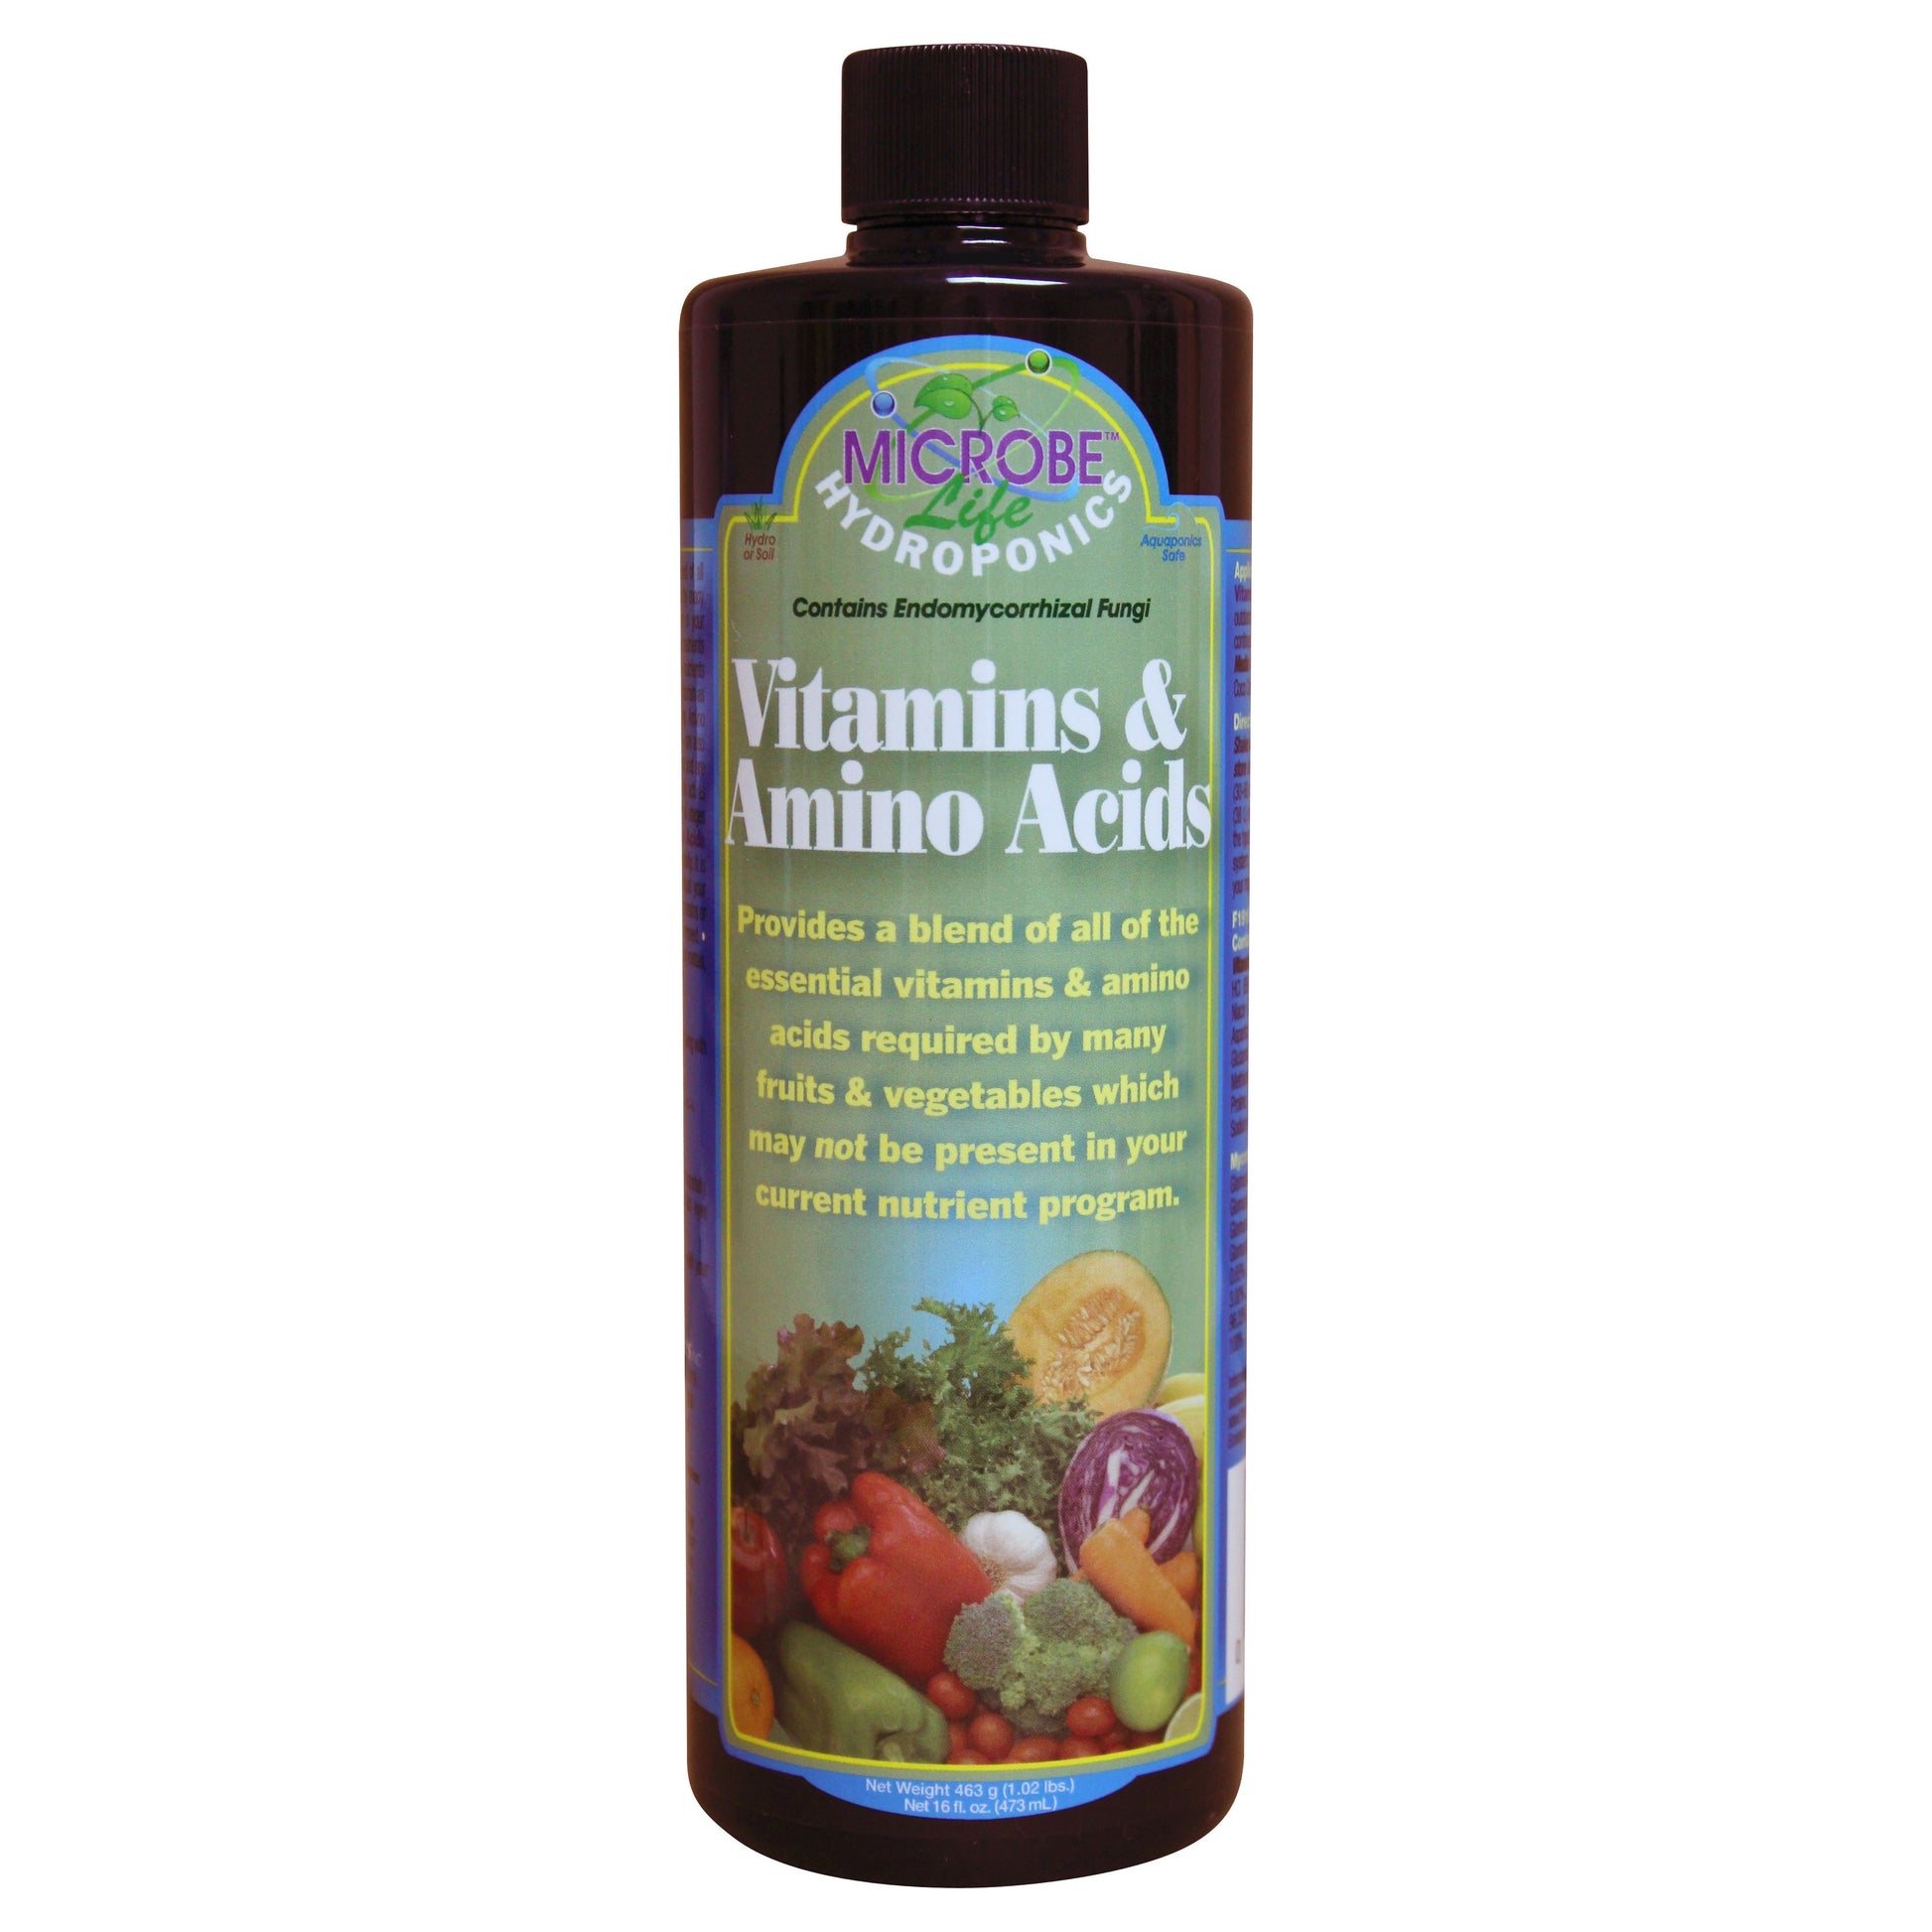 Vitamins & Amino Acids by Microbe Life Hydroponics, 16 oz.